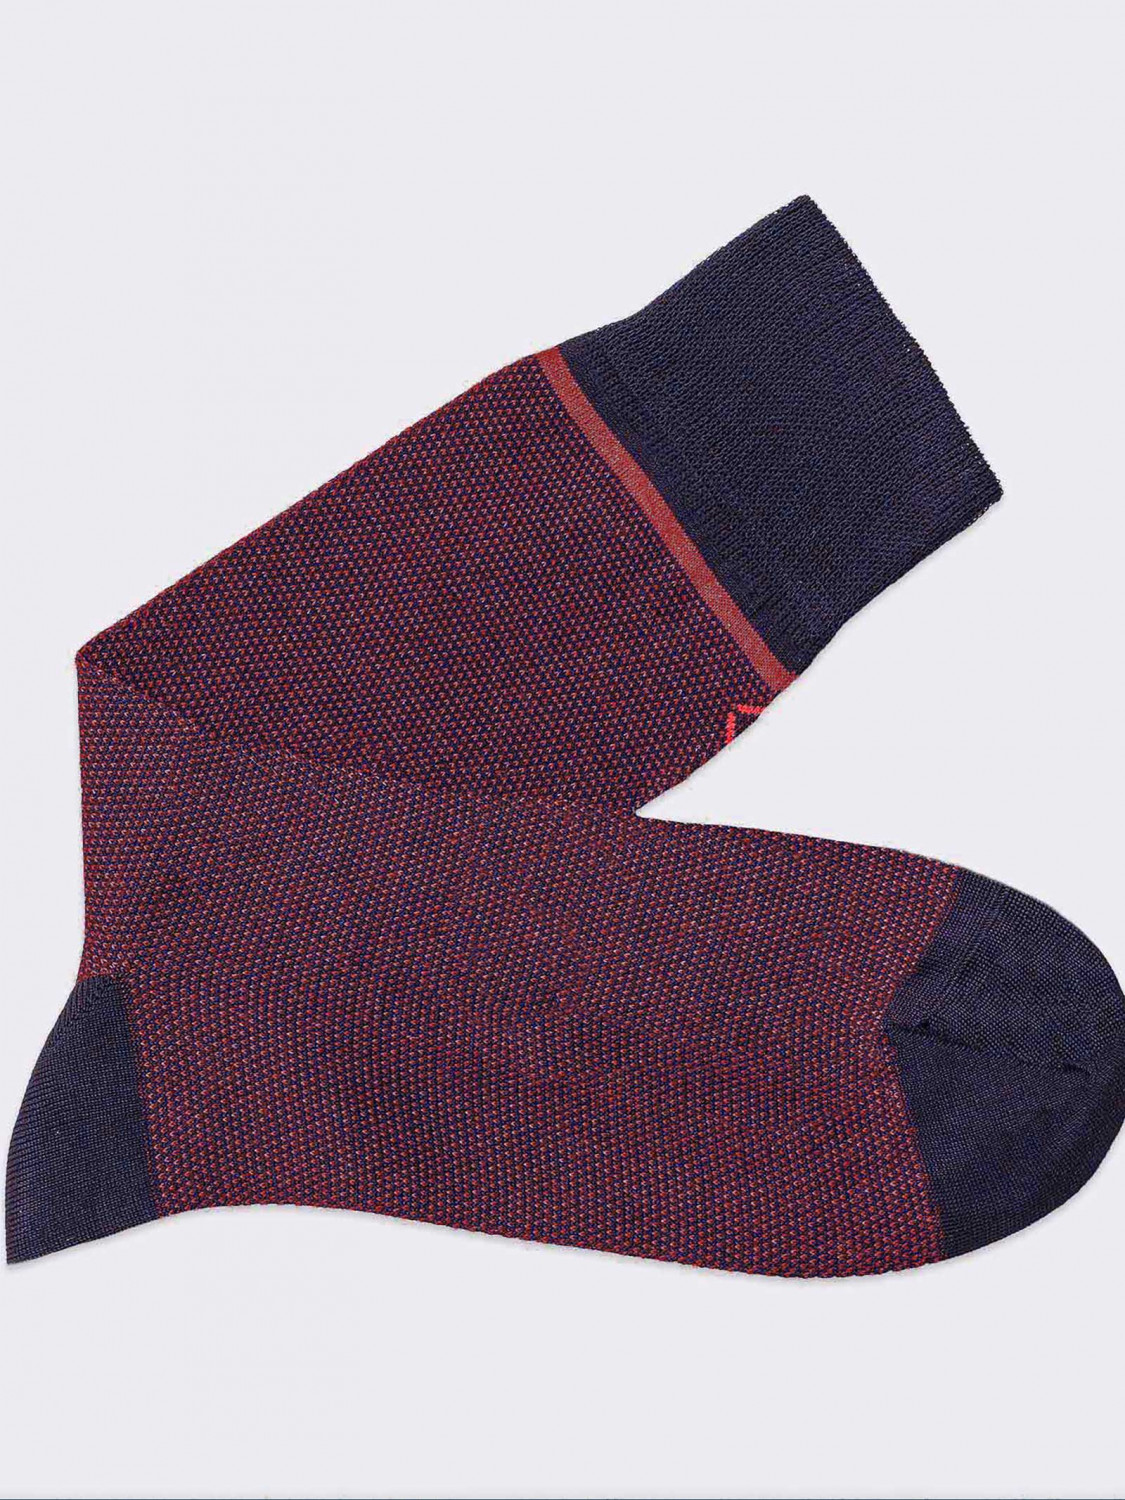 Oxford pattern Men's Crew Socks